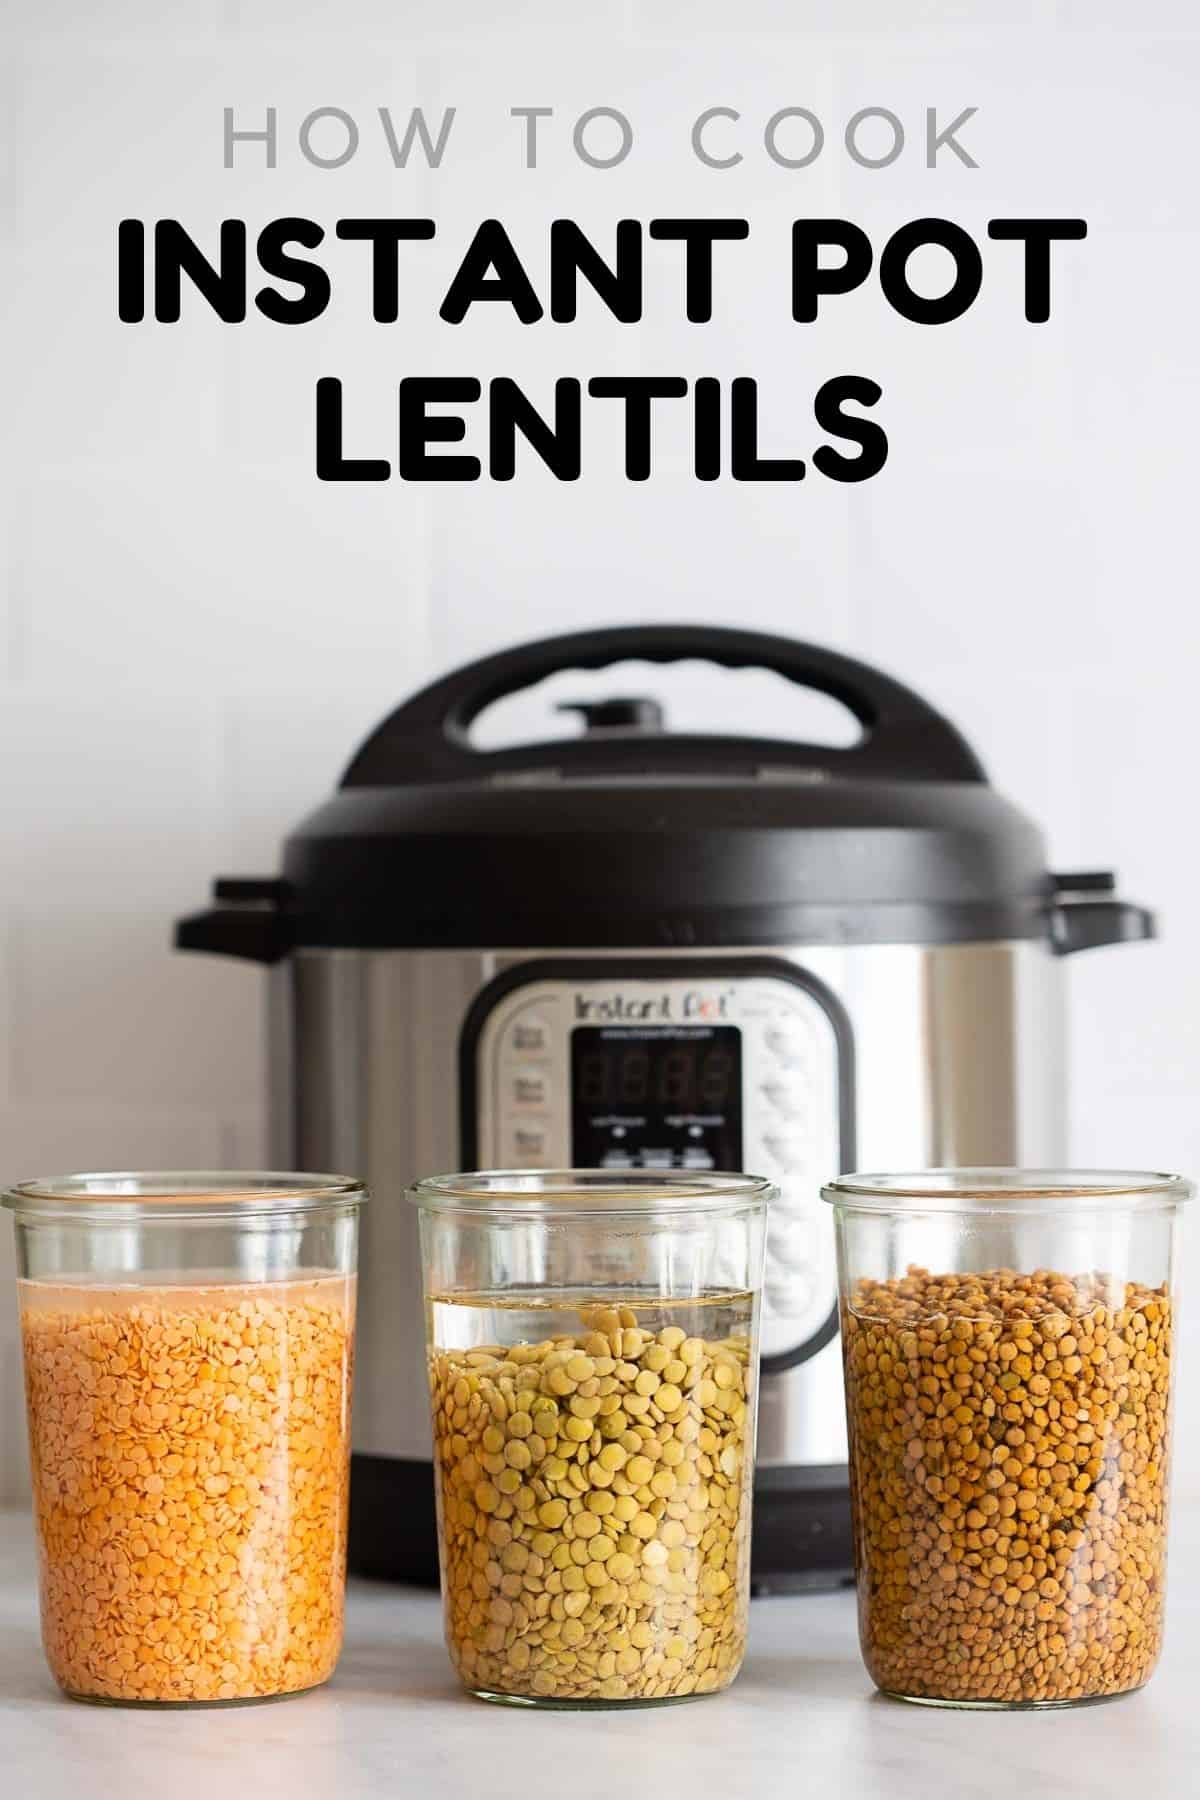 how to cook lentils instant pot lentils recipe Red lentils, green lentils, brown lentils soaked in water in jars in front of Instant Pot.